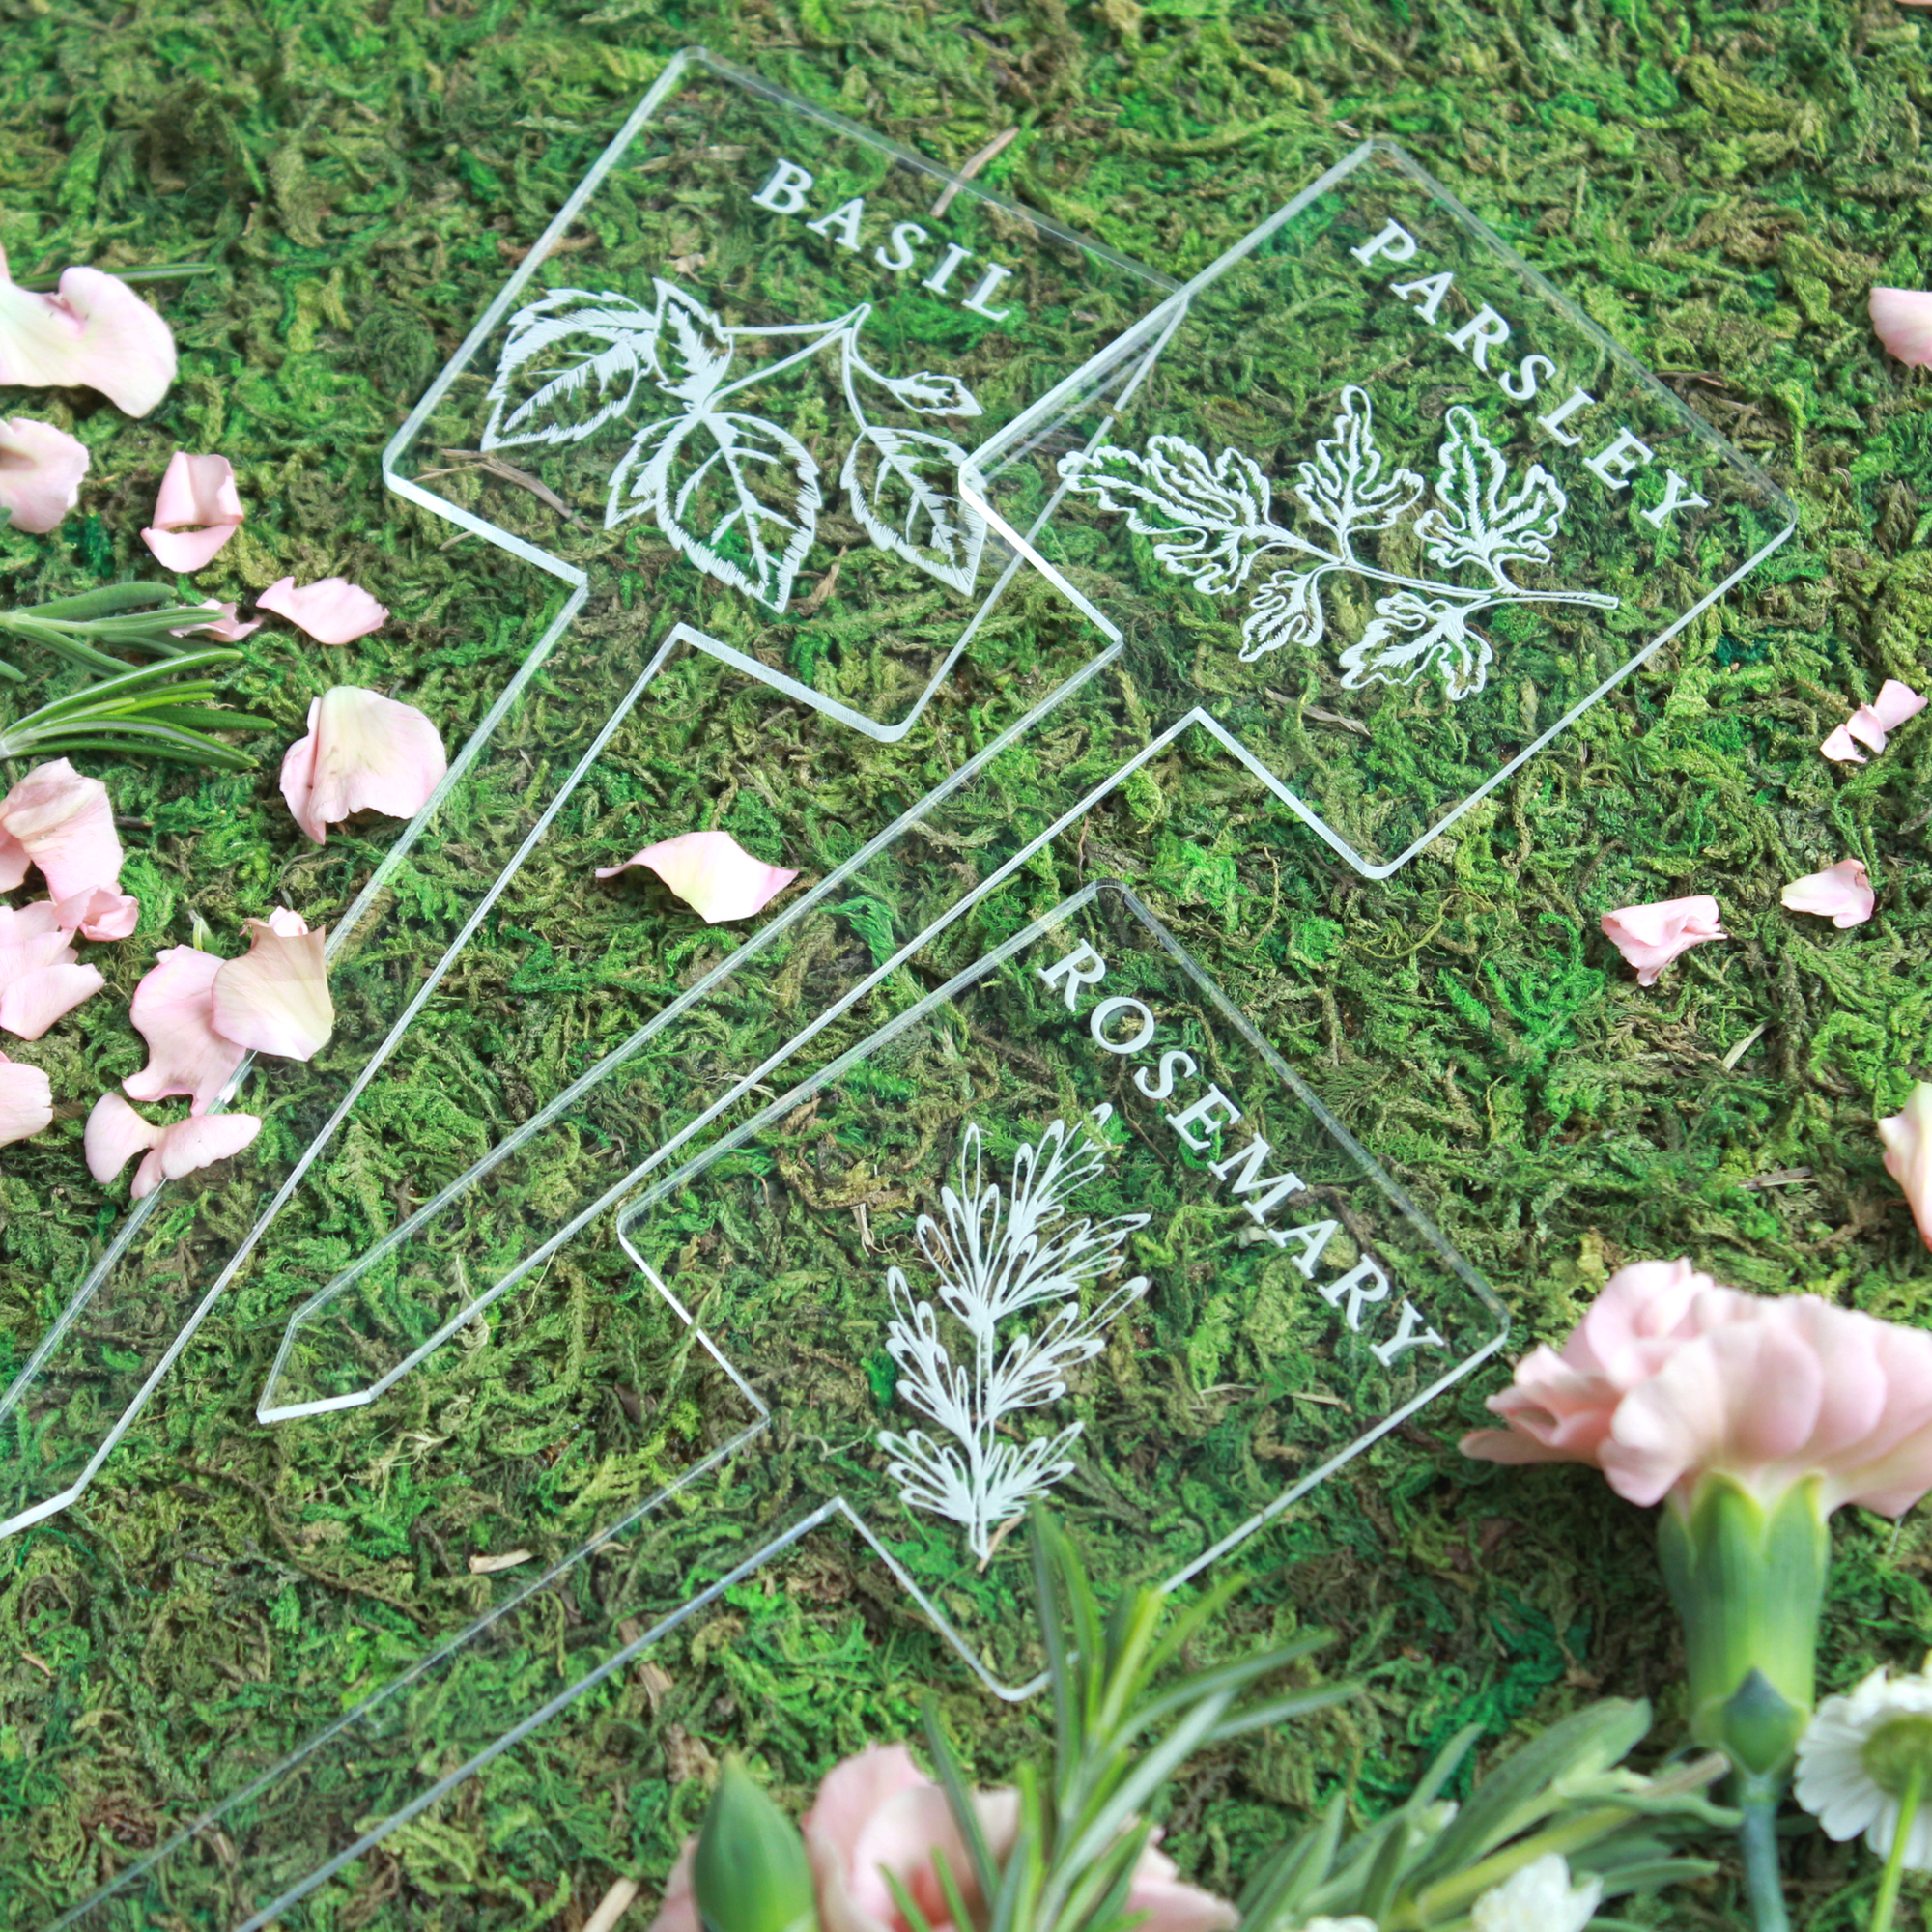 Acrylic Garden Markers